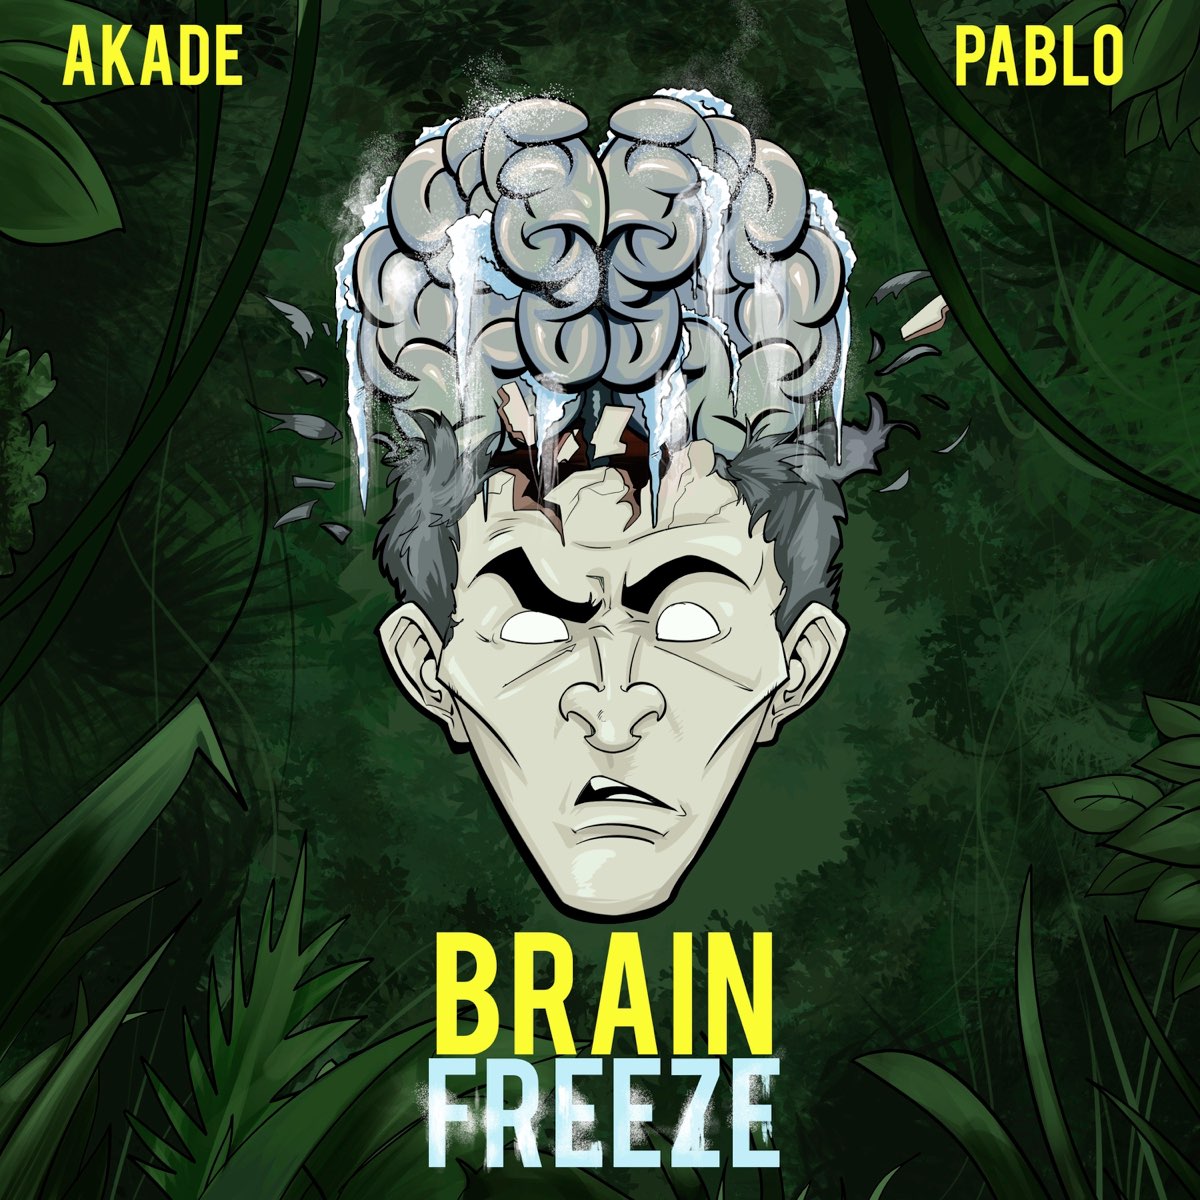 Brain freeze. Brain Freeze Vape.